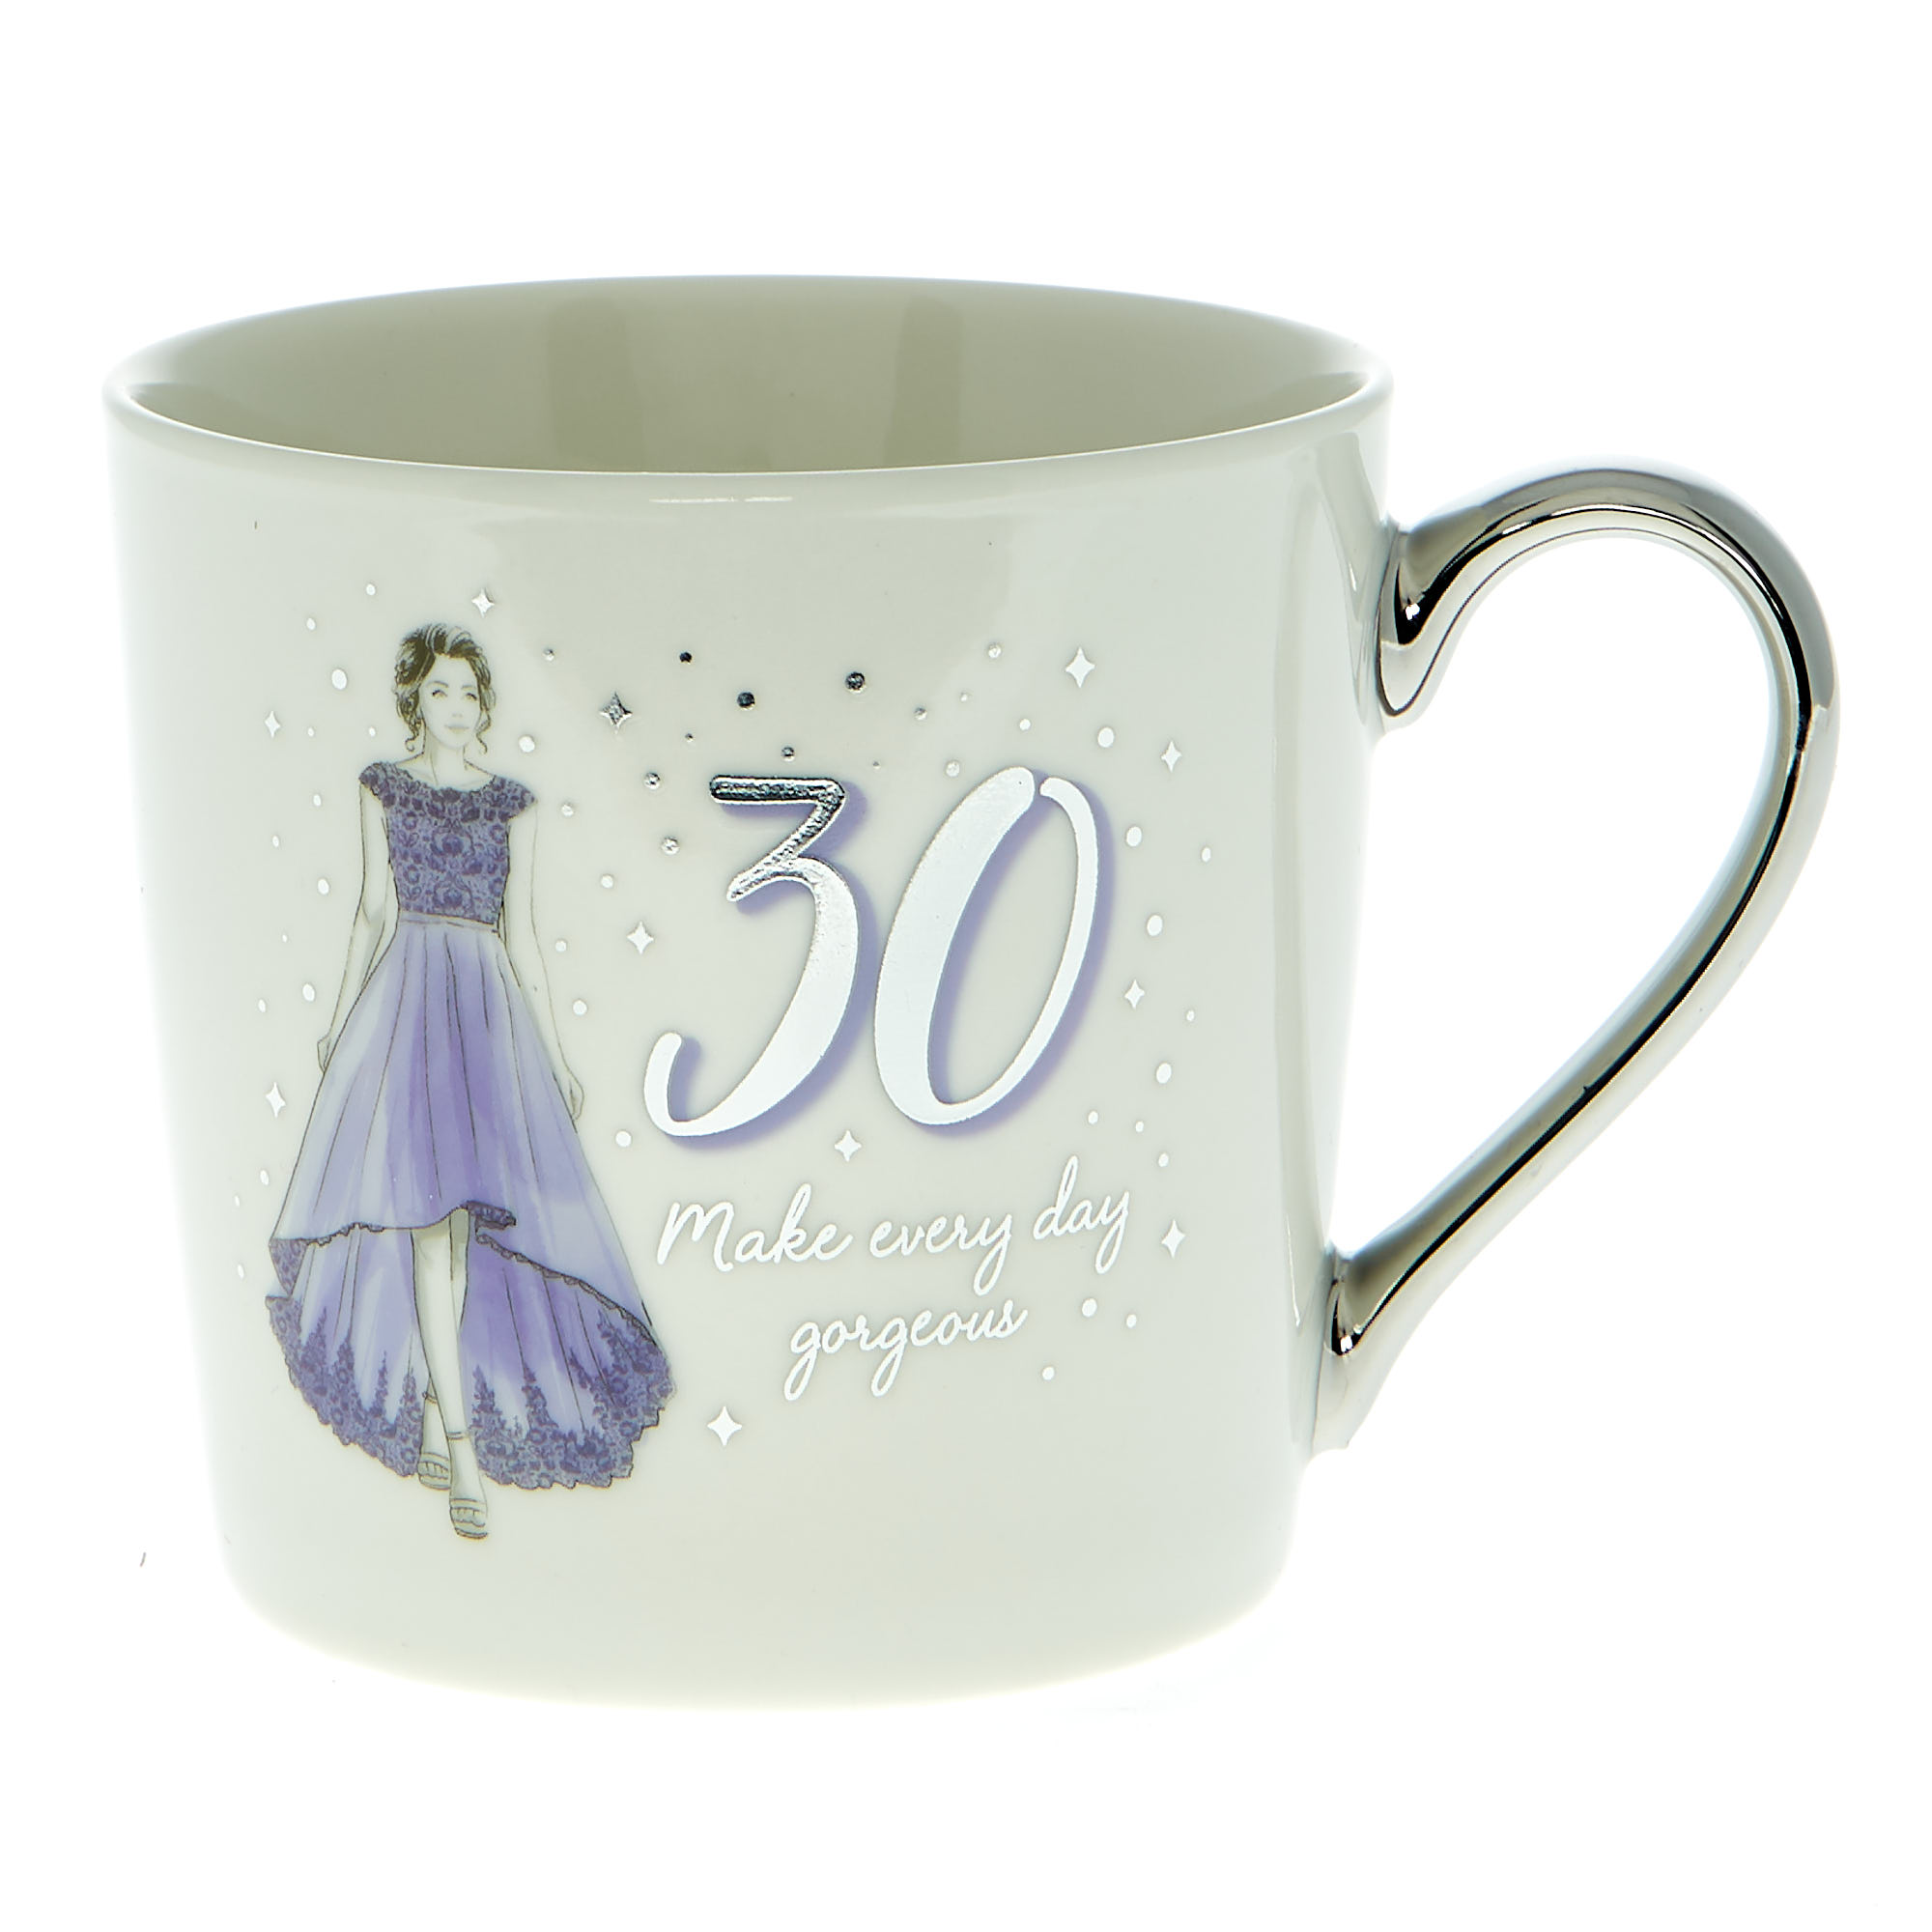 30 Make Every Day Gorgeous Mug